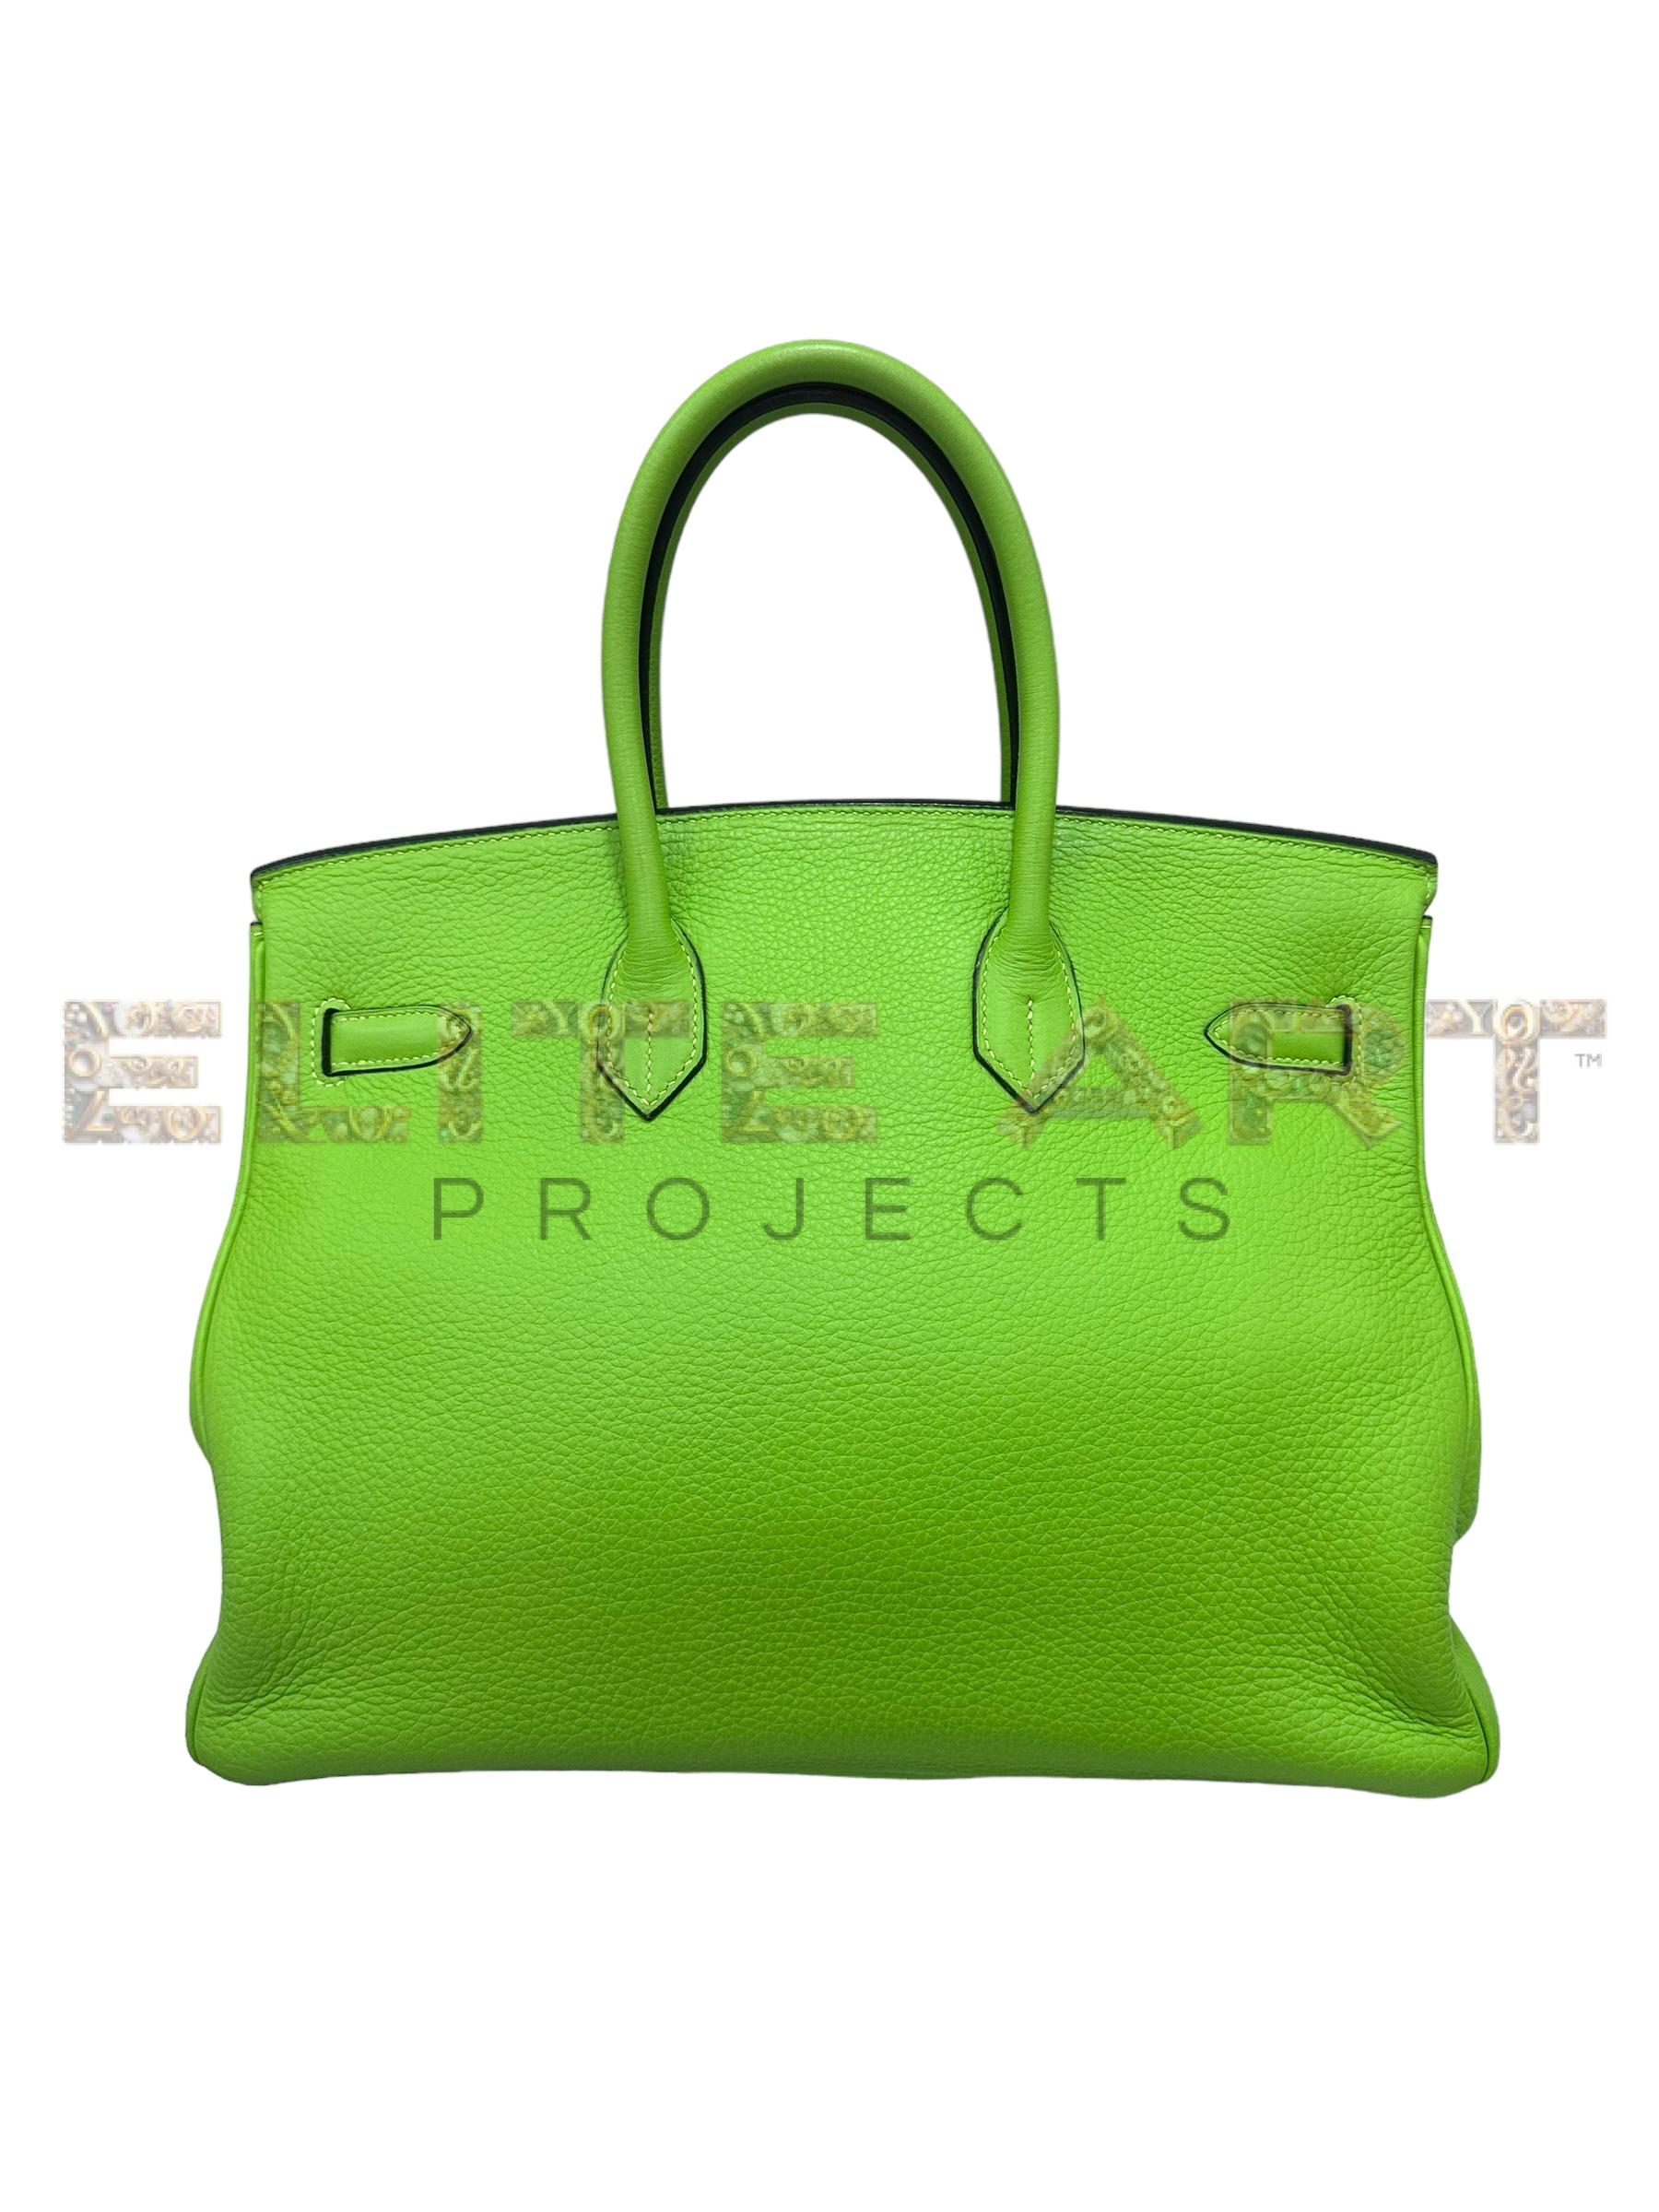 Hermès Birkin 35, luxury handbag, Clemence leather, Green Apple color, iconic purse, golden hardware, spacious interior